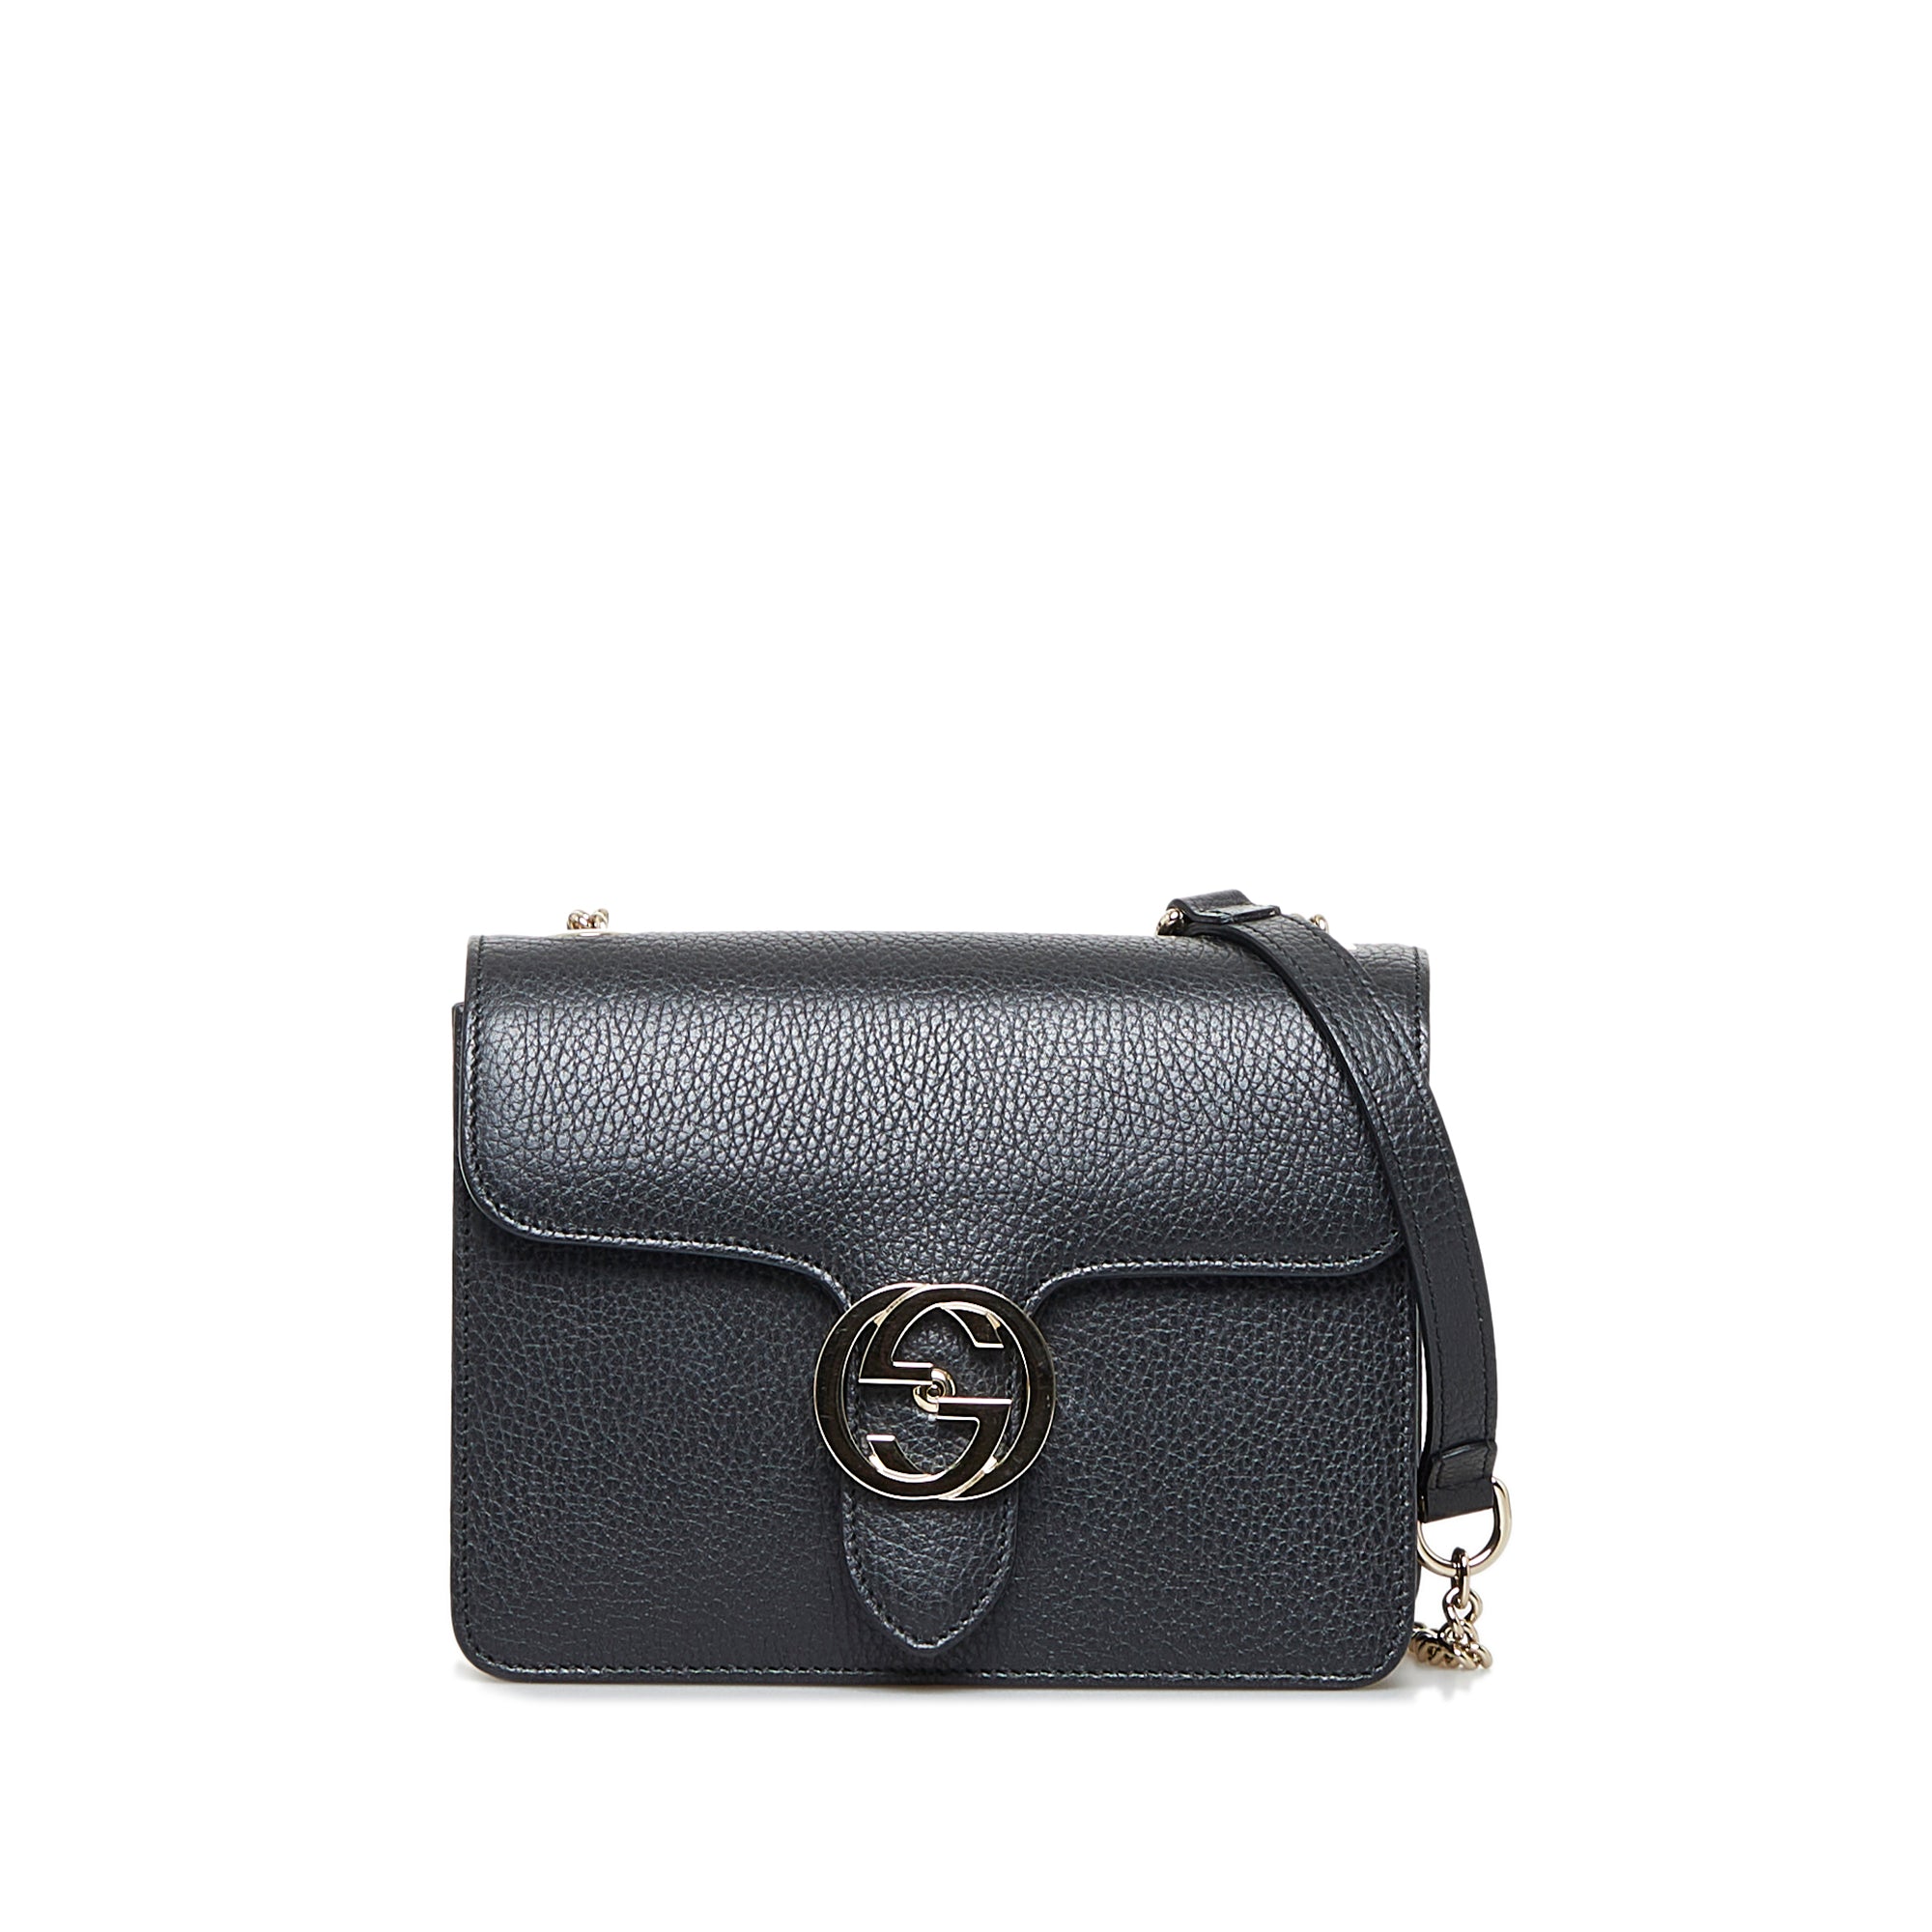 Gucci GG Dollar Calf Black Interlocking Chain Handbag Leather Bag Italy  510304